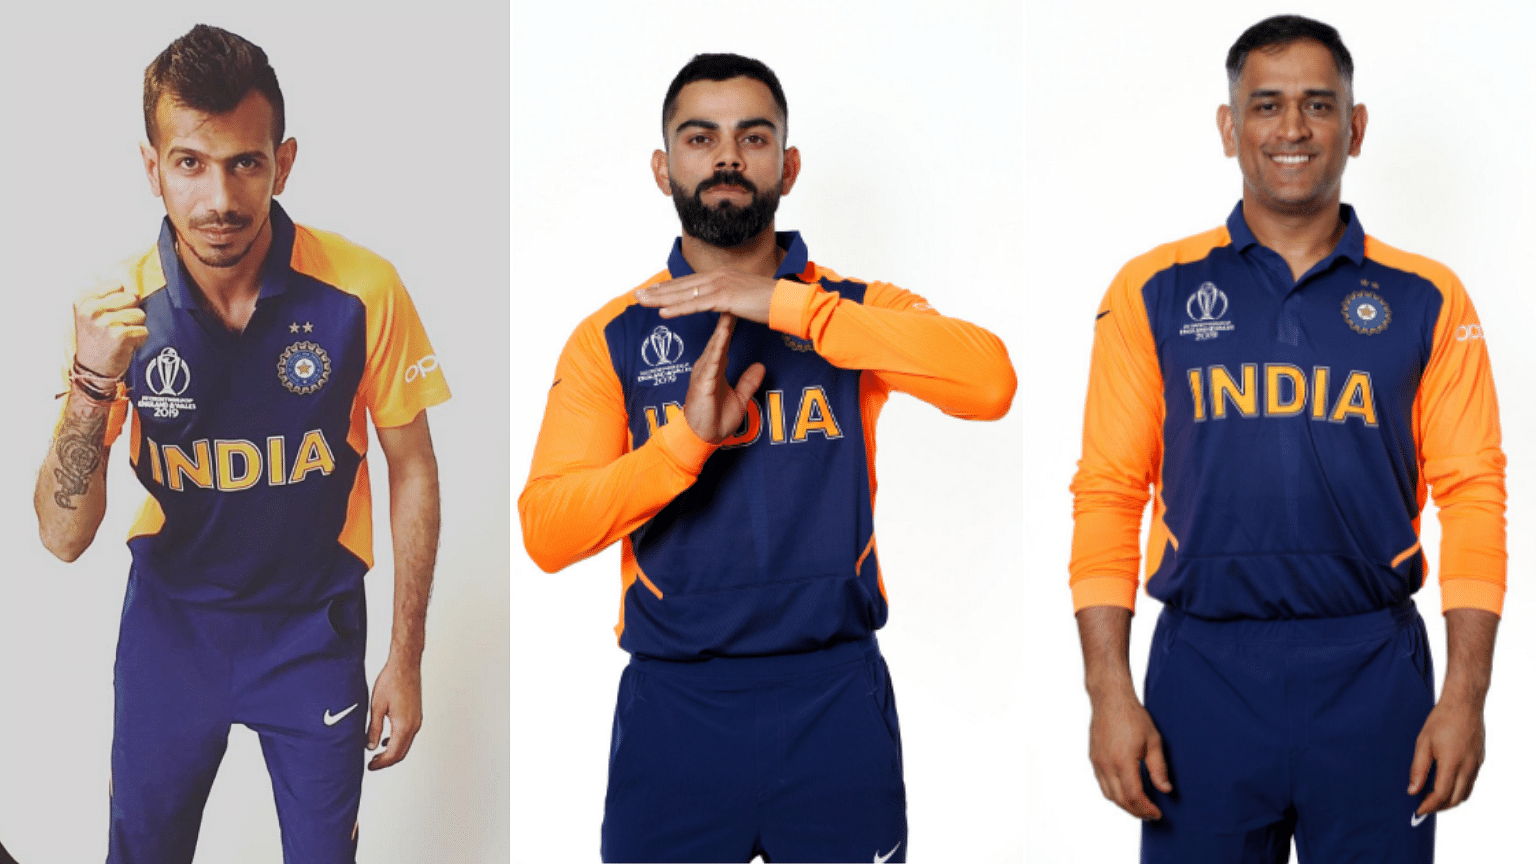 Indian Team Orange Jersey Photos: MS 